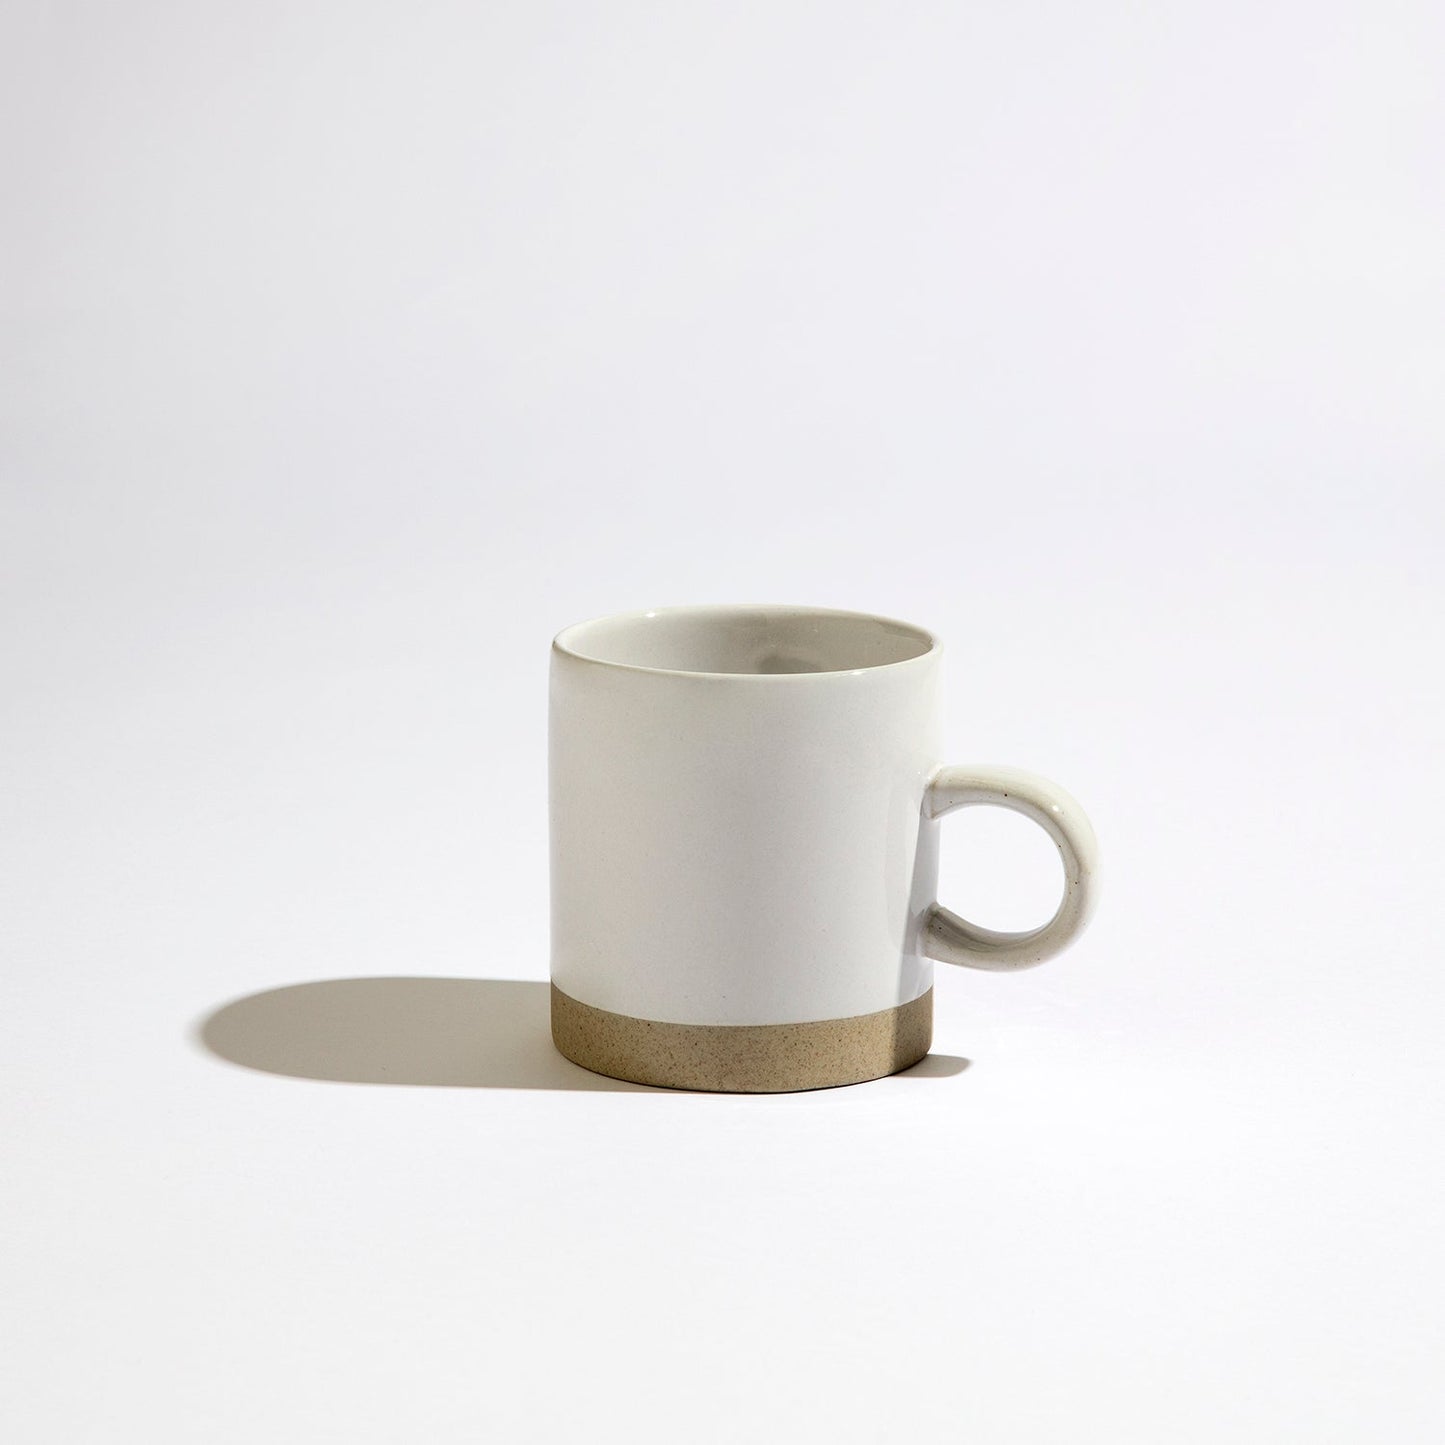 Bronte Mug 4 Pack BUNDLEPACKS BEN DAVID BY KAS White Mug 8.2x8.8cm